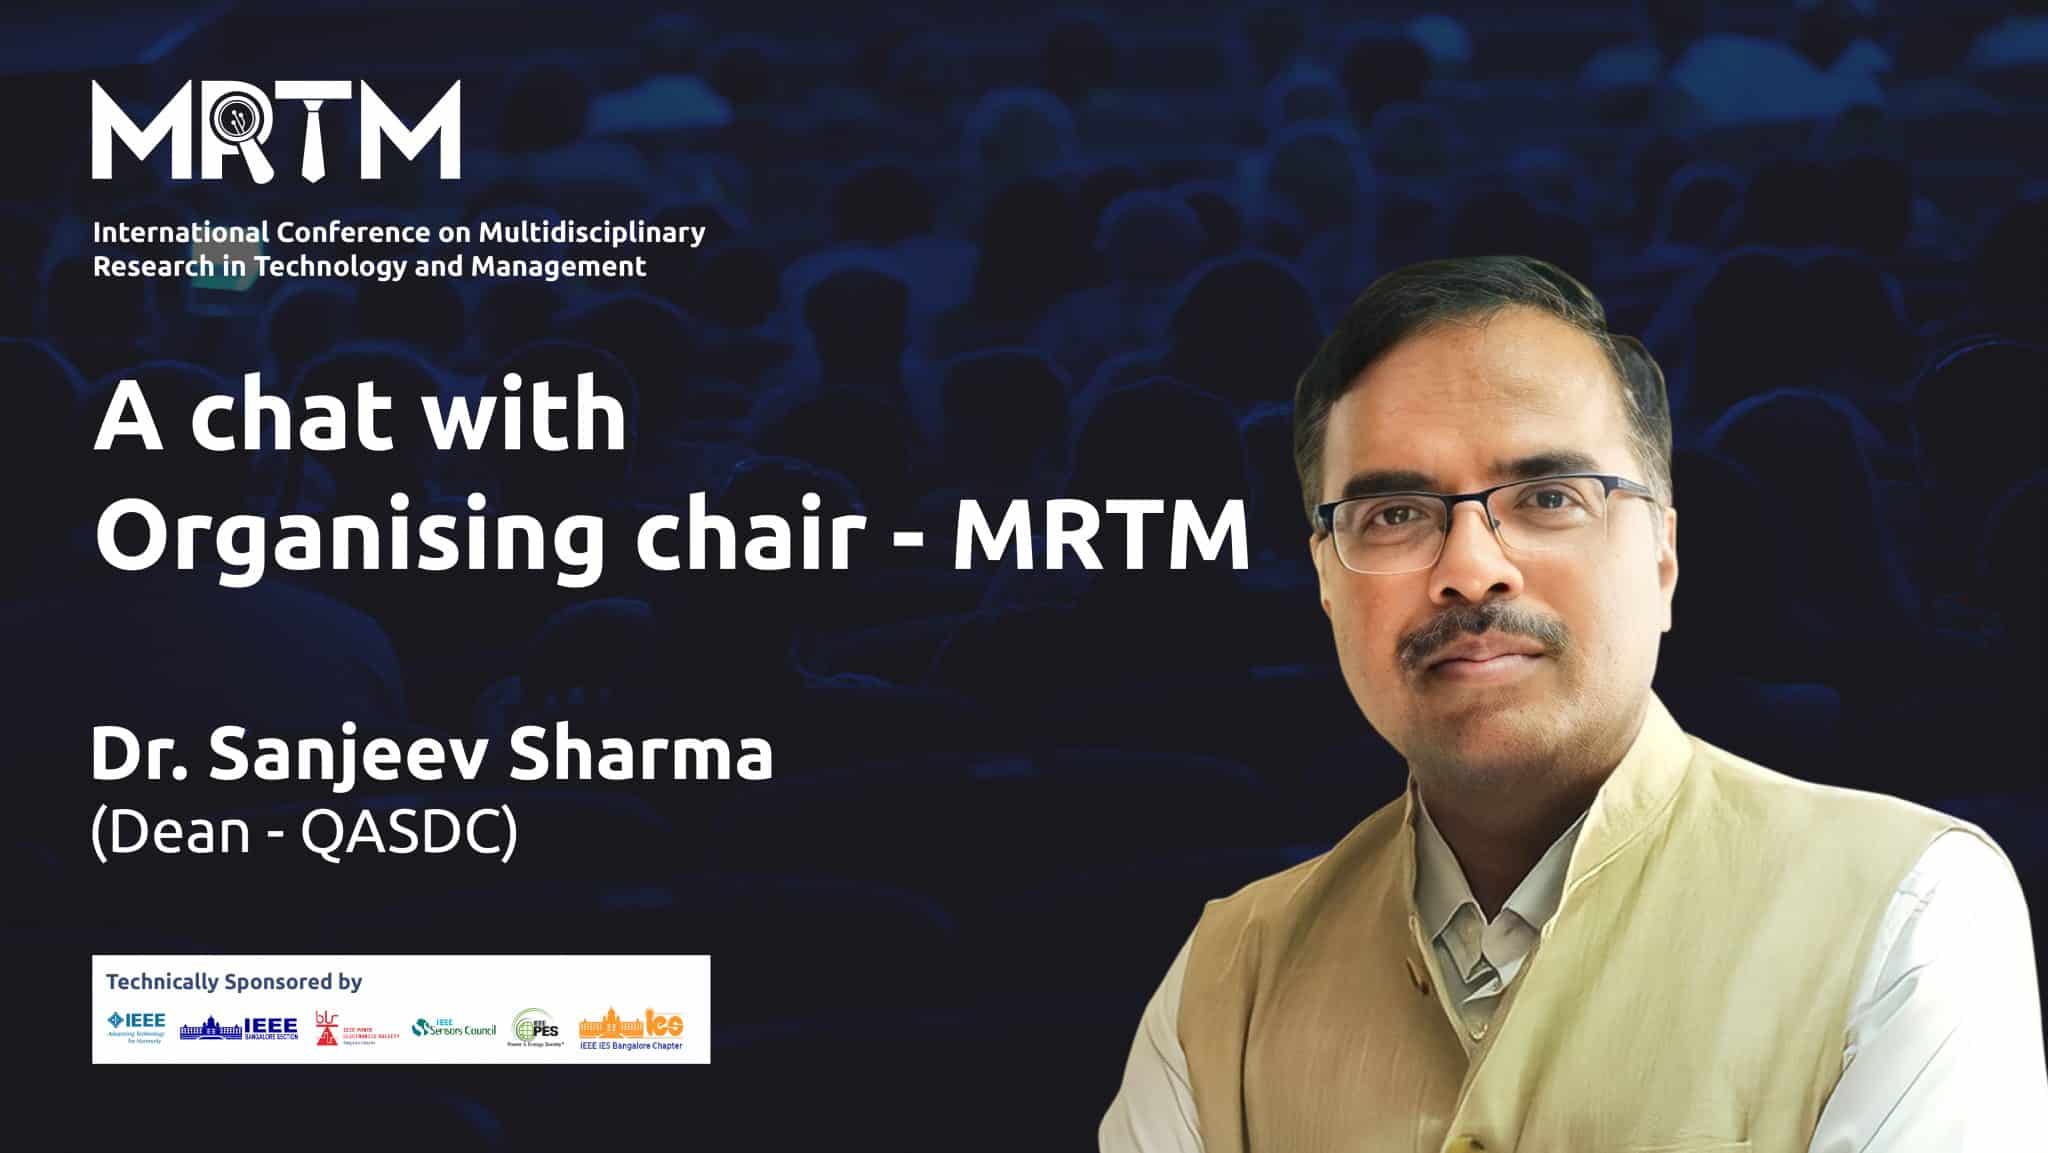 The MRTM conference: Retrospect